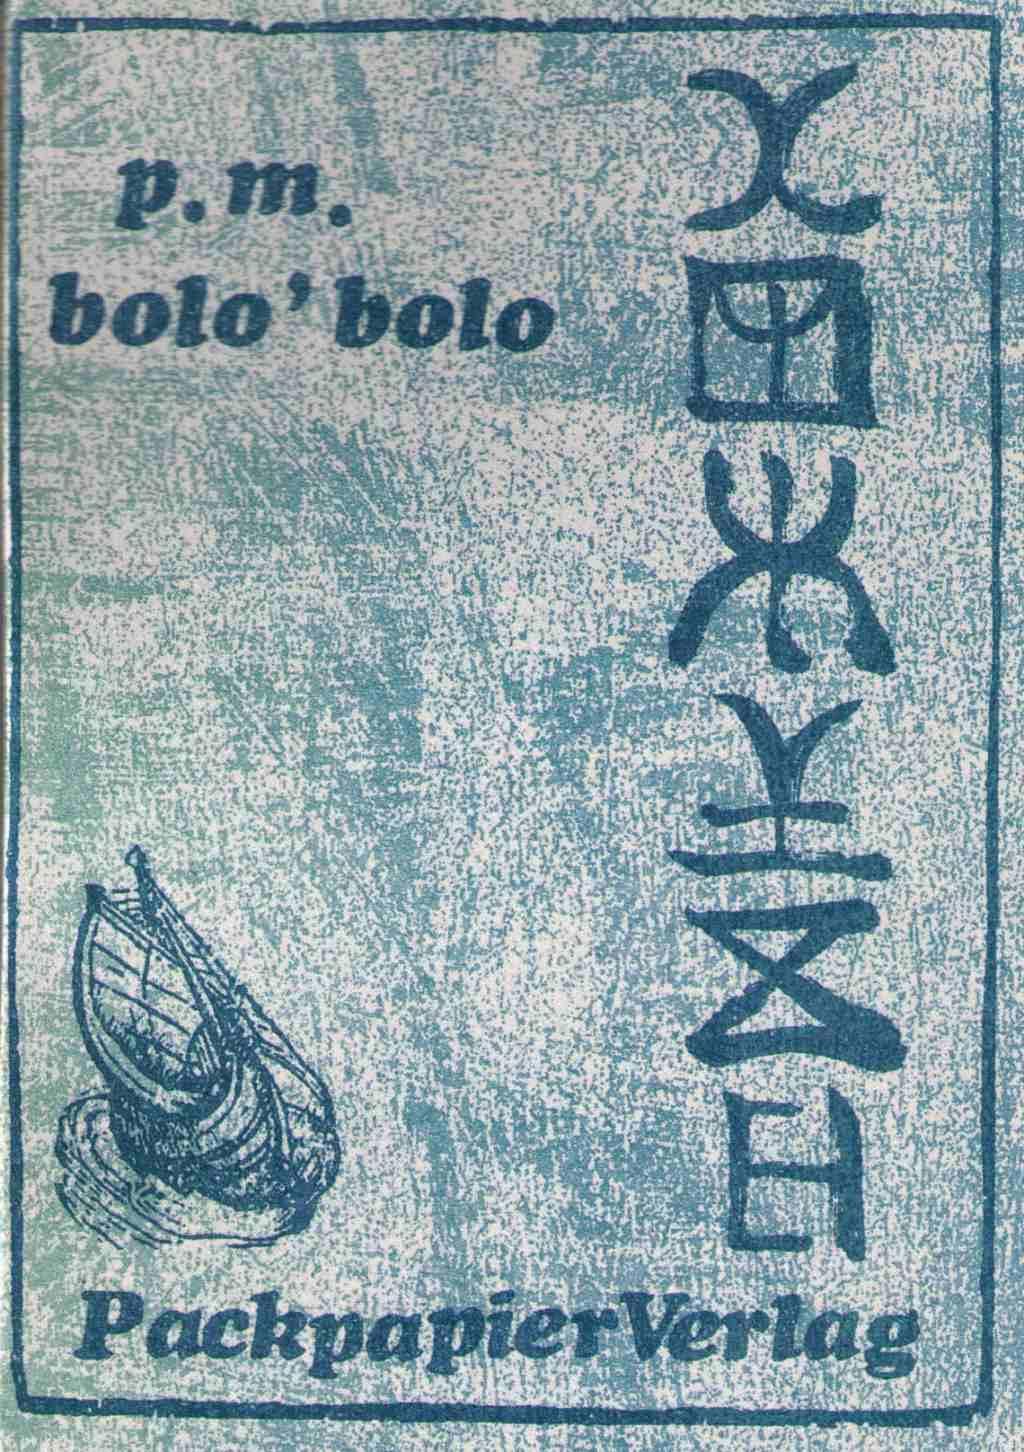 Hans Widmer: bolo’bolo (German language, 2013, Packpapierverlag)